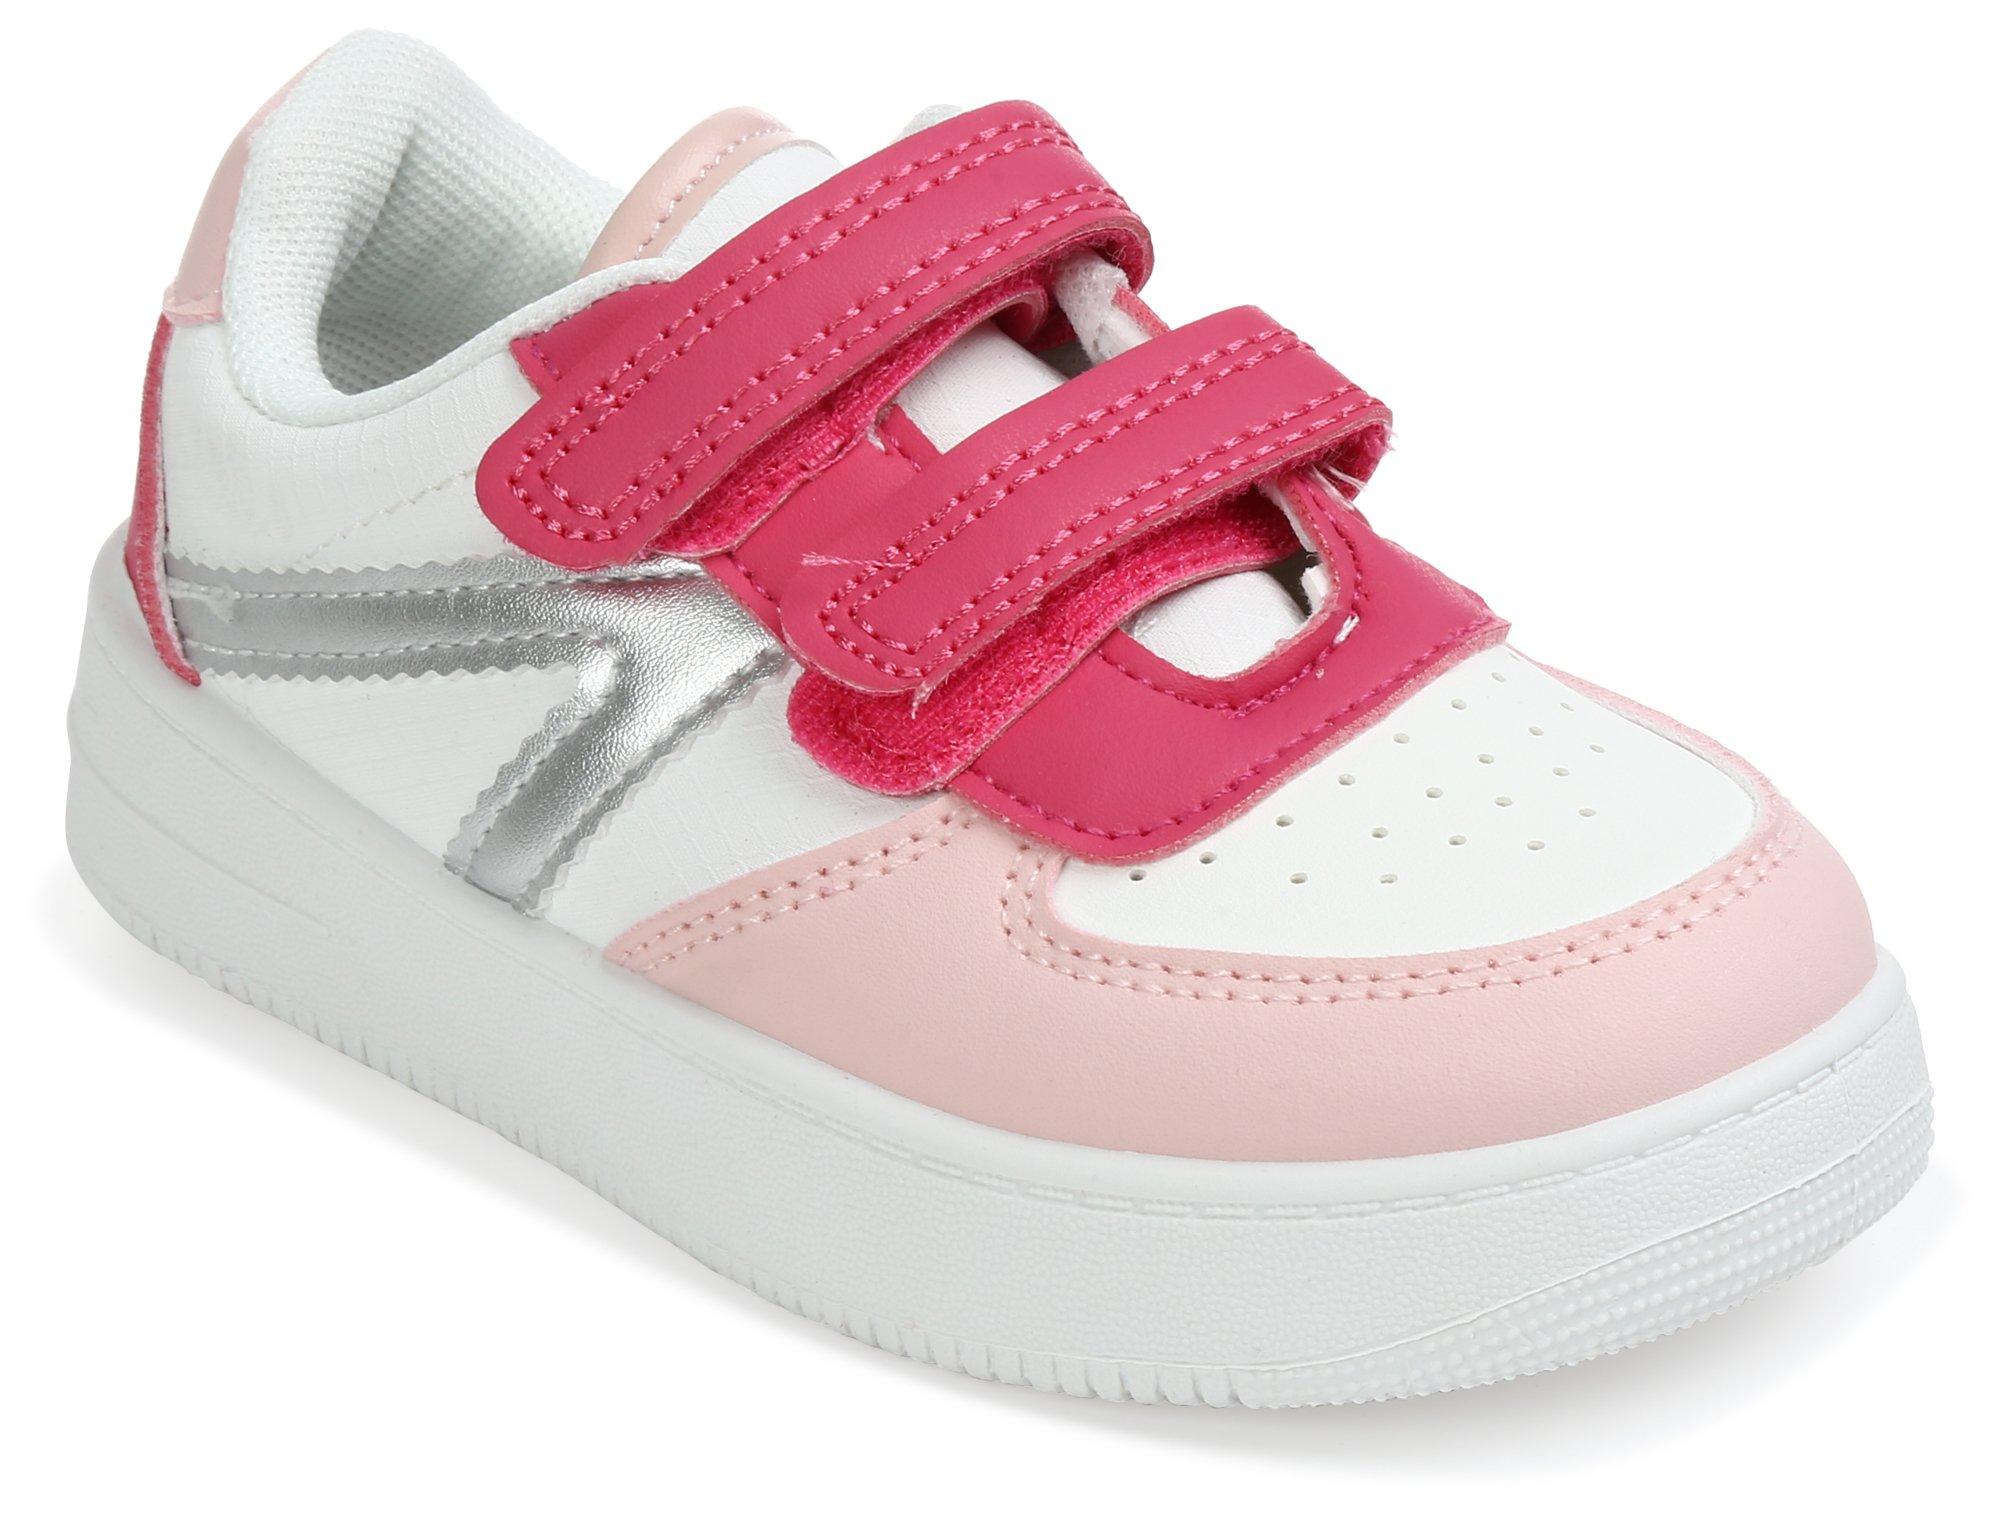 Toddler Girls Casual Sneakers